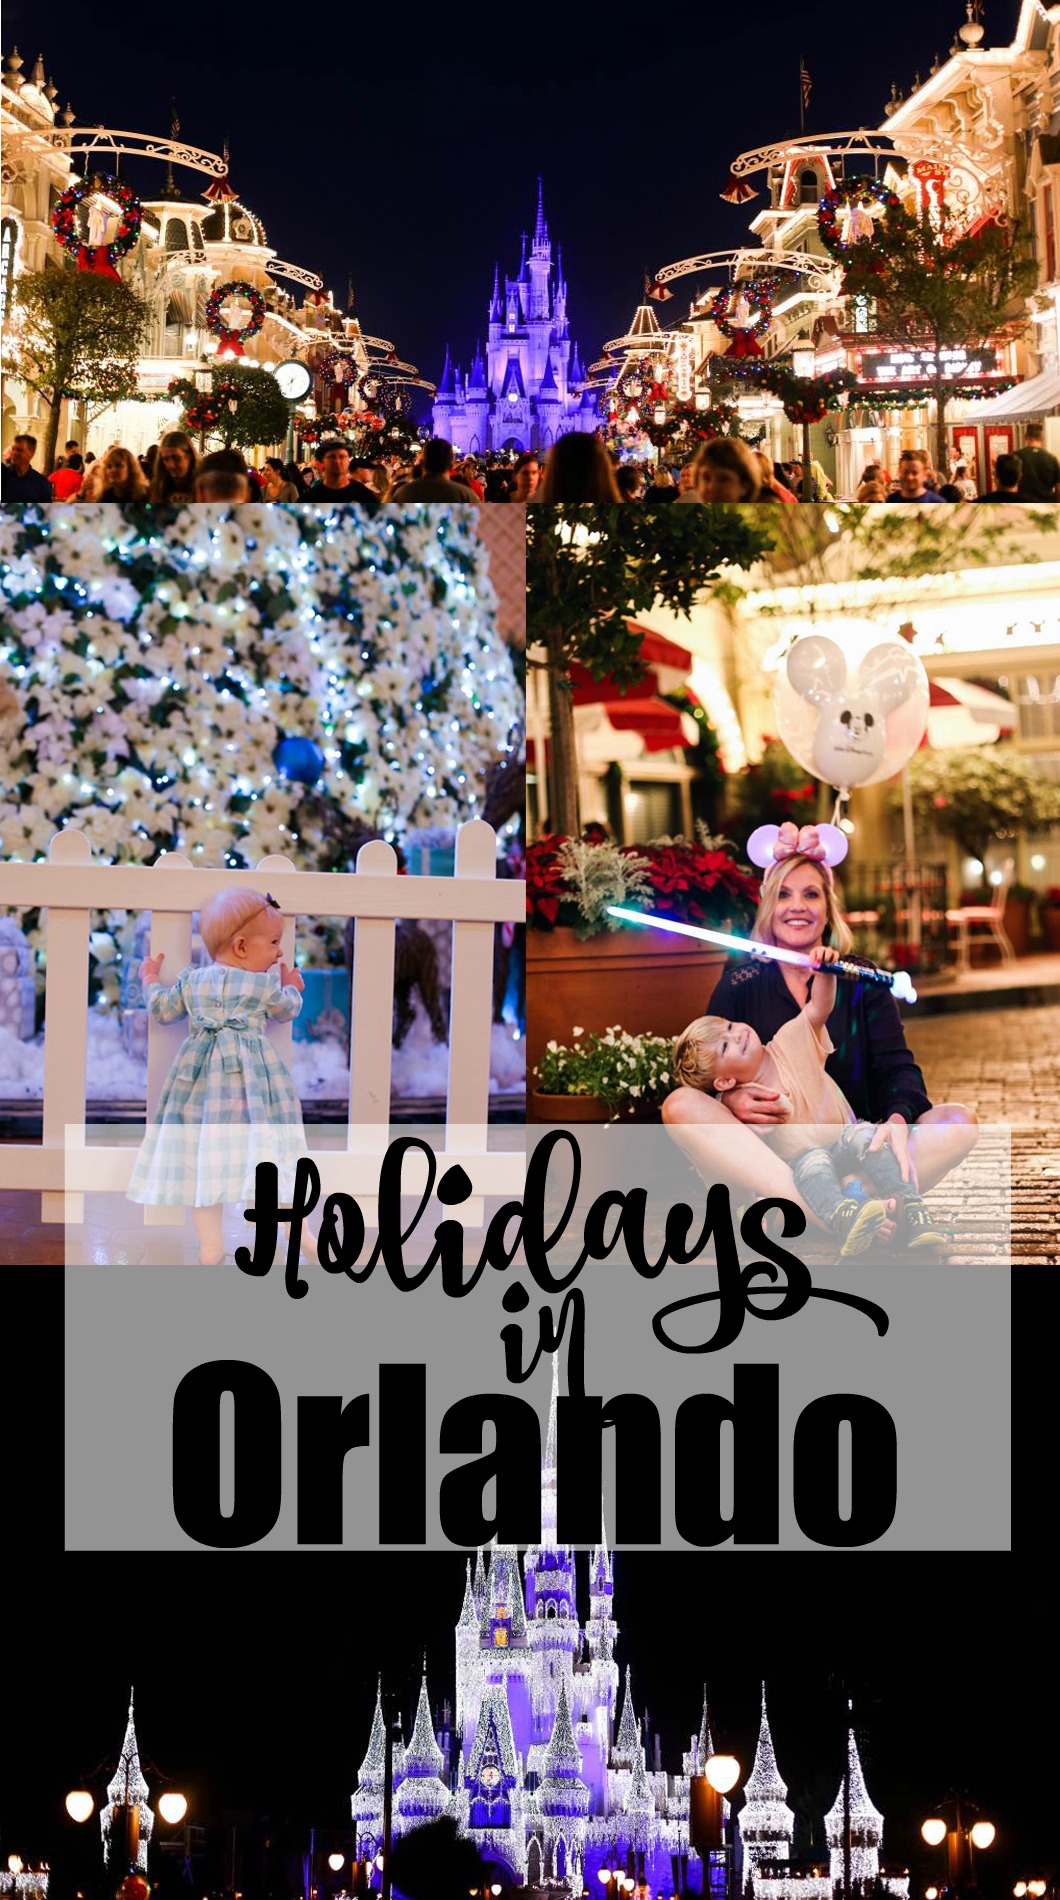 Holidays in Orlando - Holiday Attractions in Orlando by Atlanta travel blogger Happily Hughes